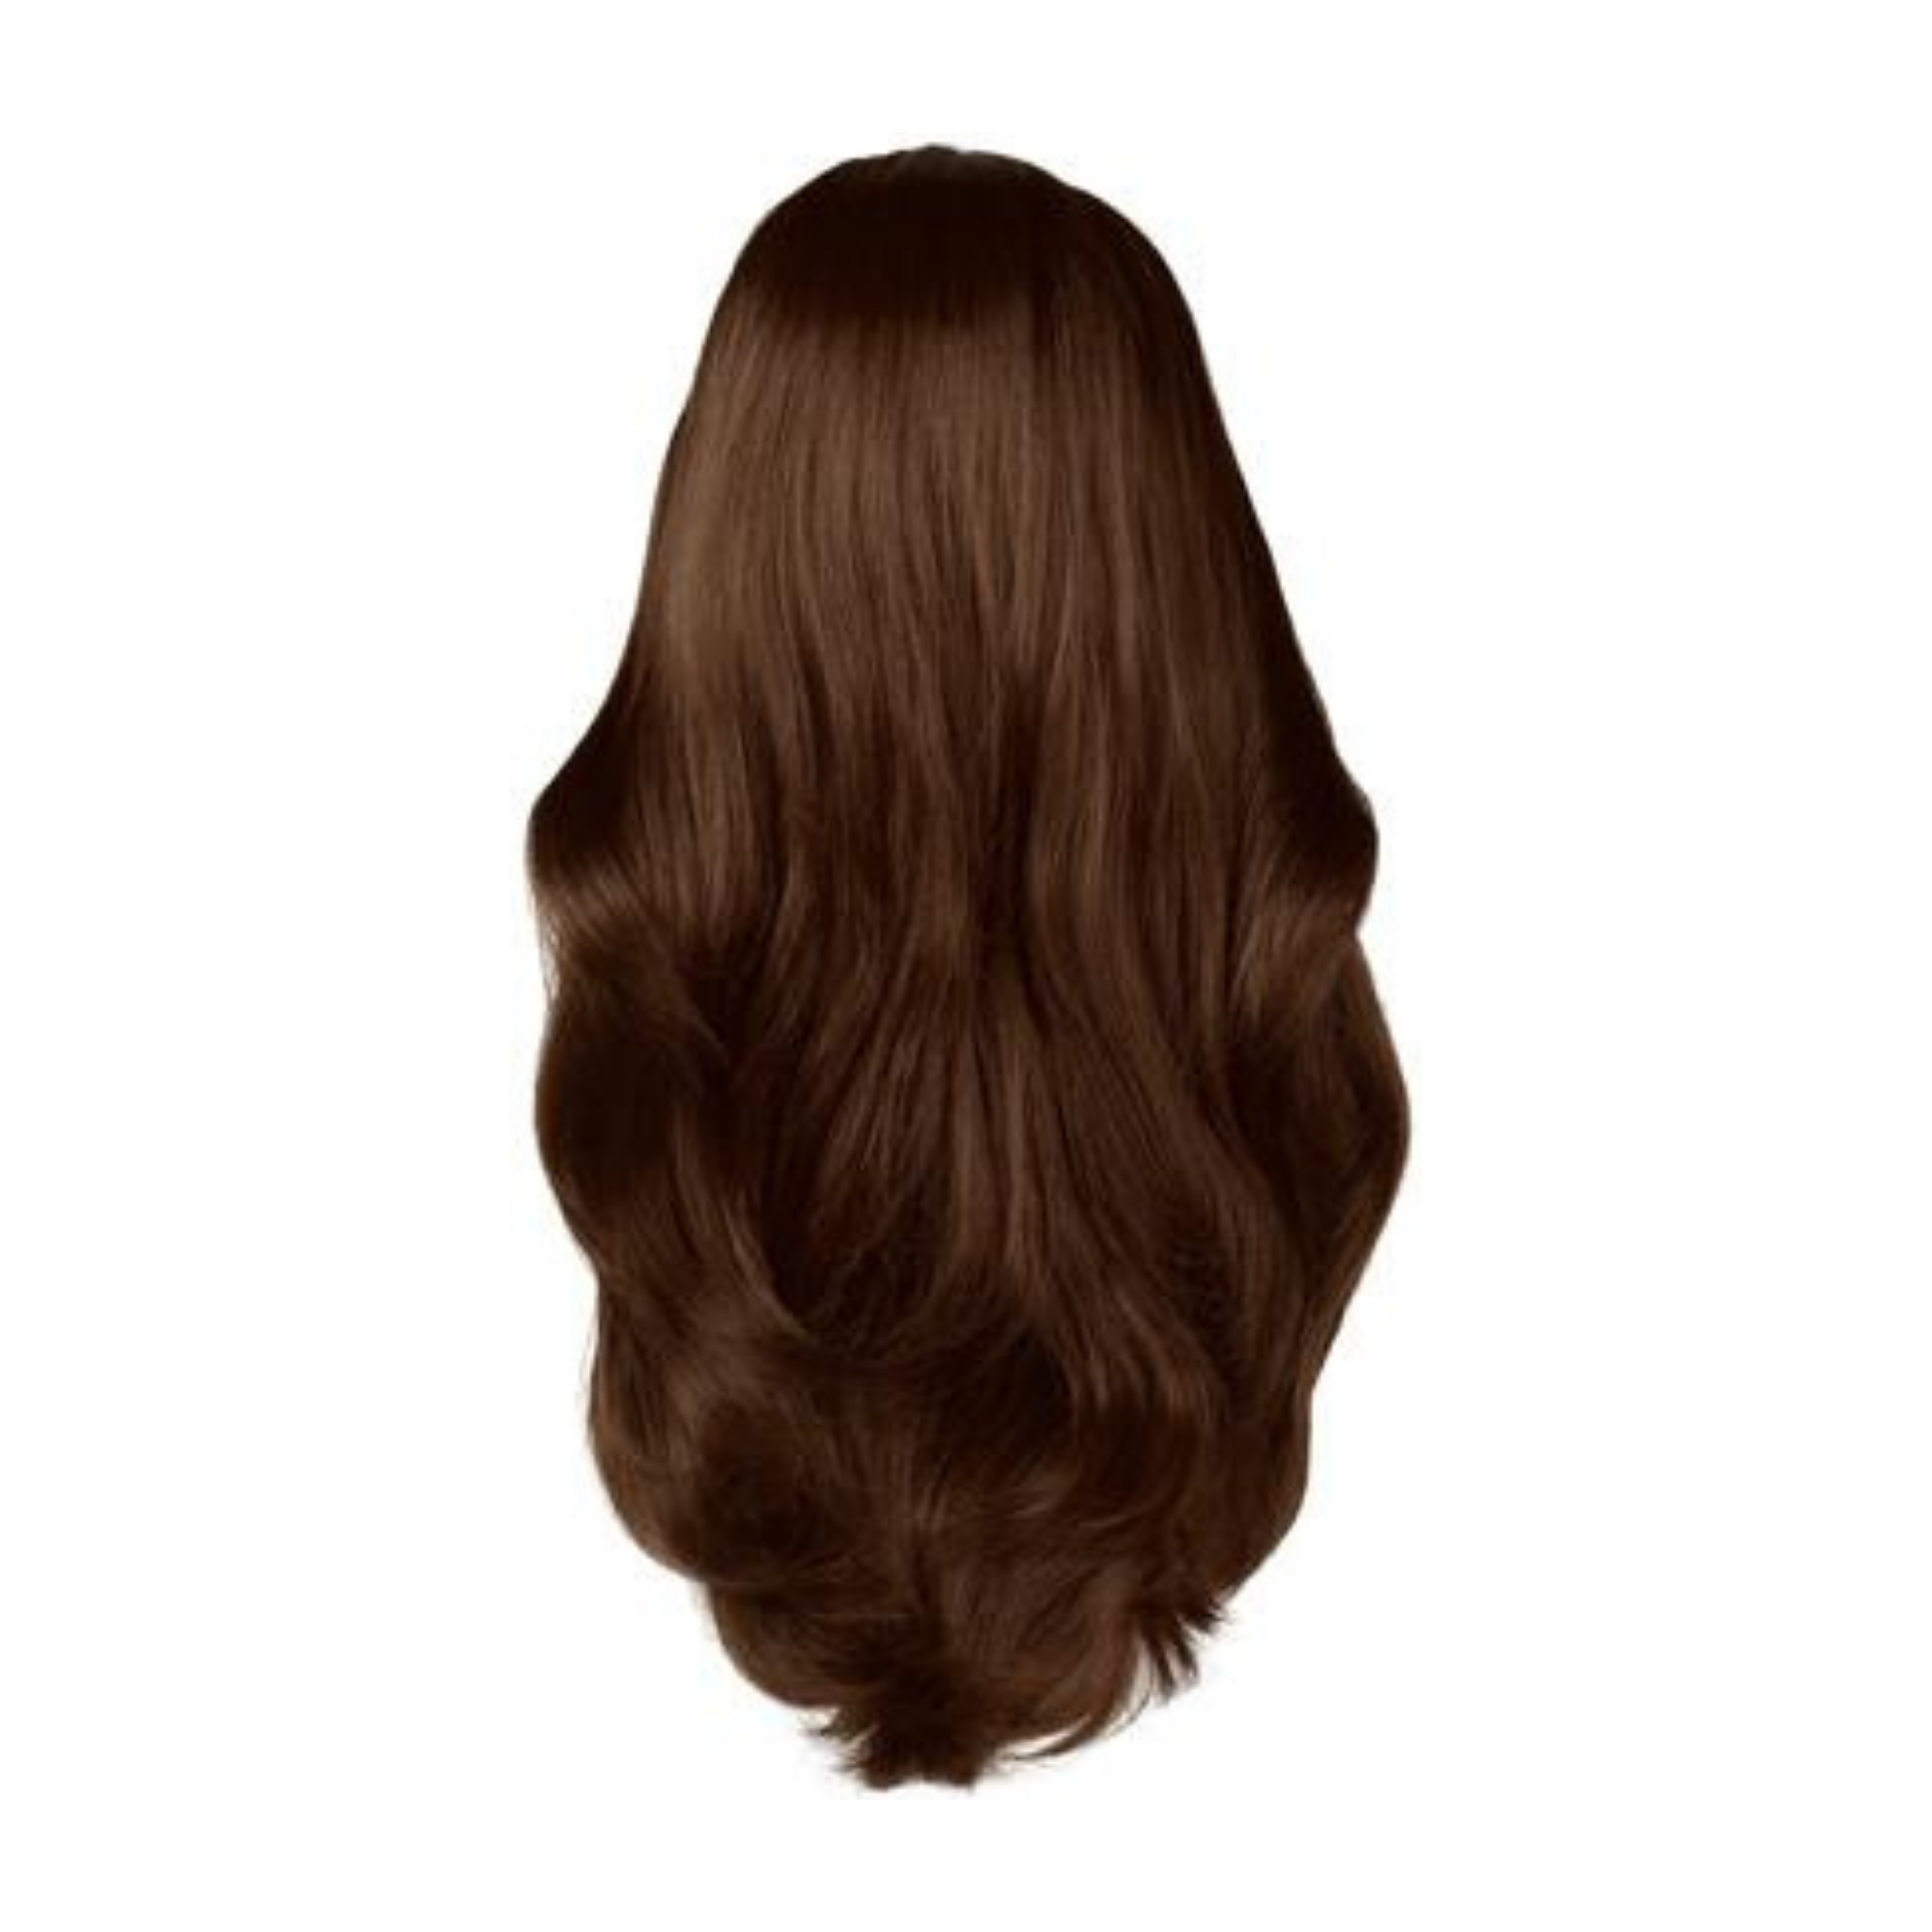 image of hair rehab london half wig hairpiece in shade chocolate